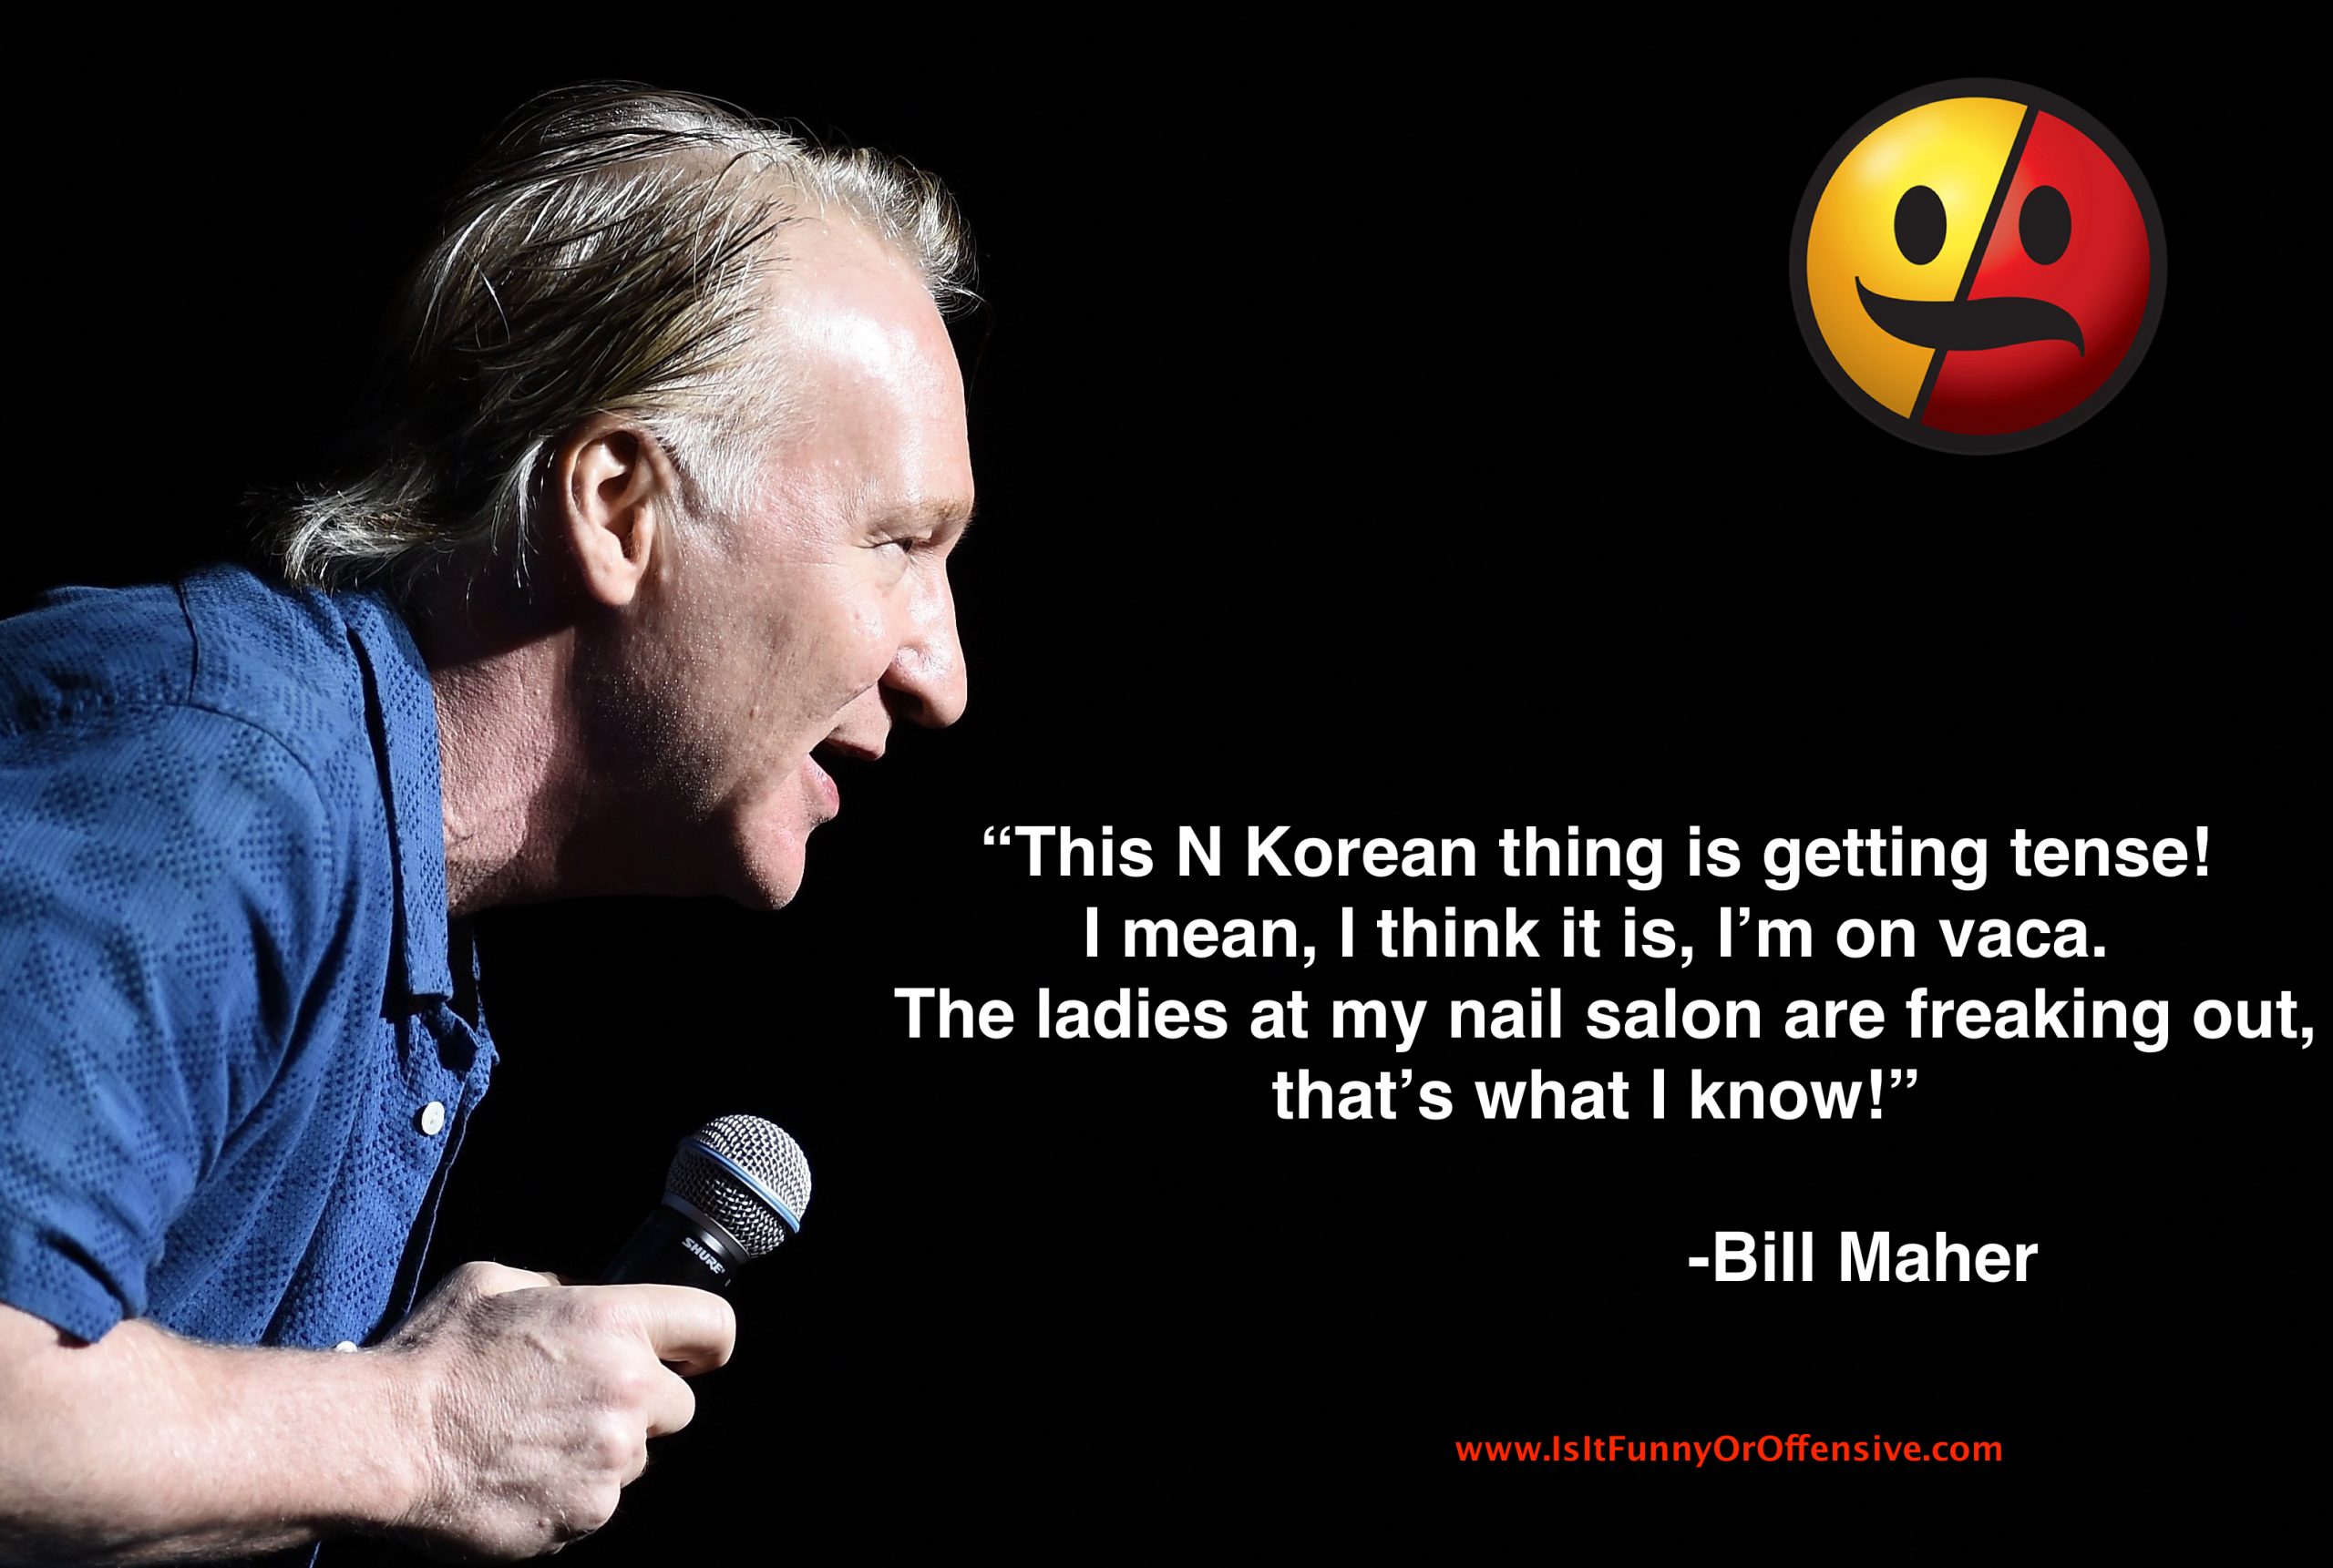 Bill Maher Under Fire for Korean Tweet